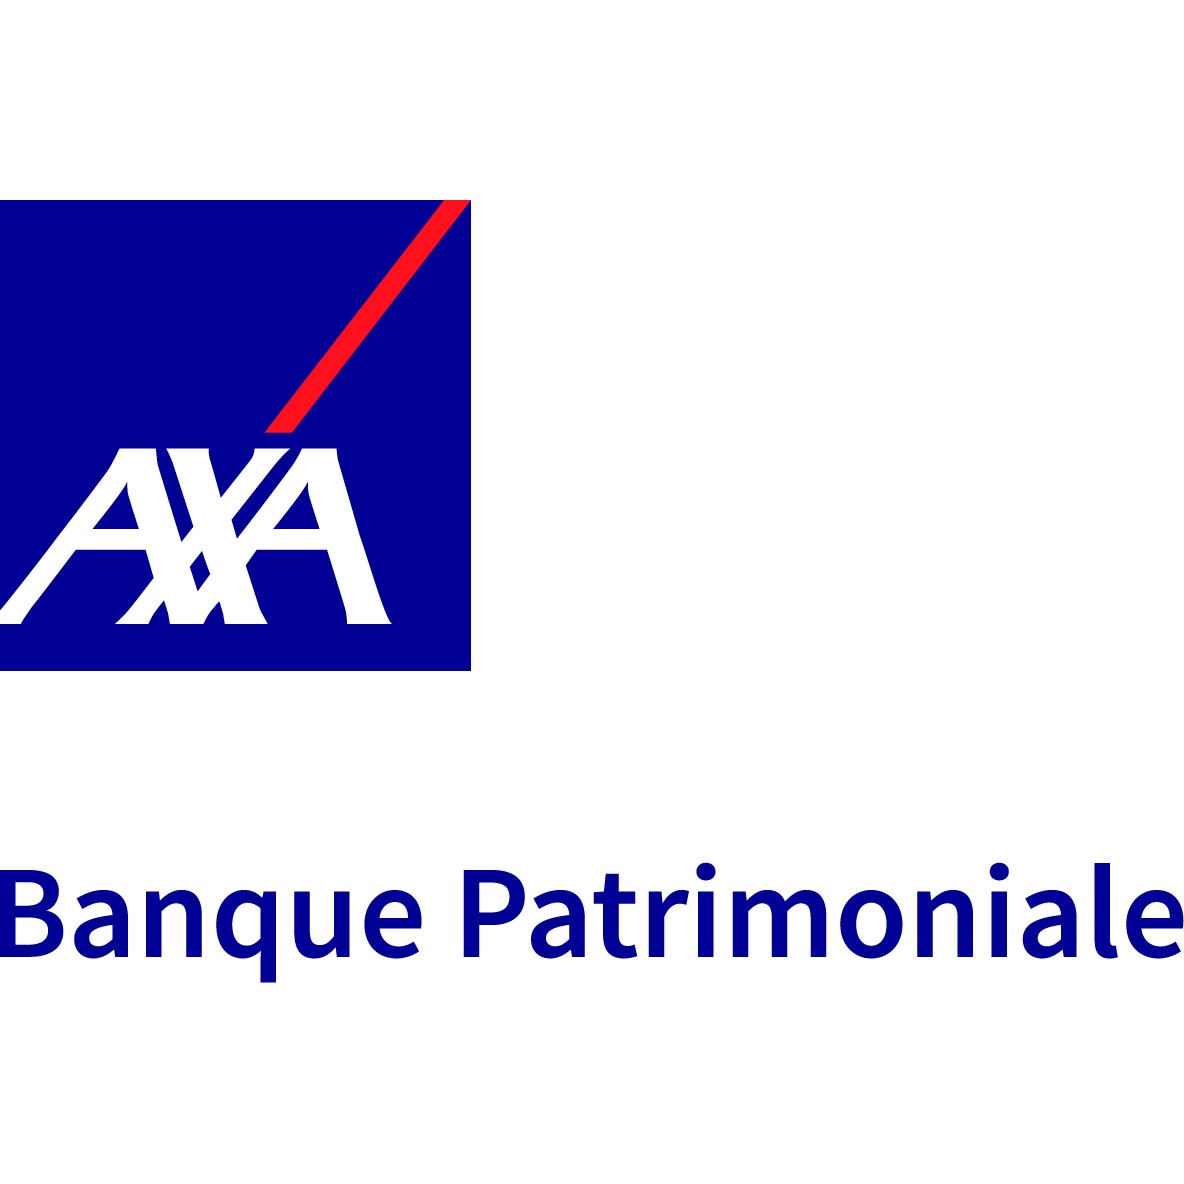 AXA - Banque Patrimoniale